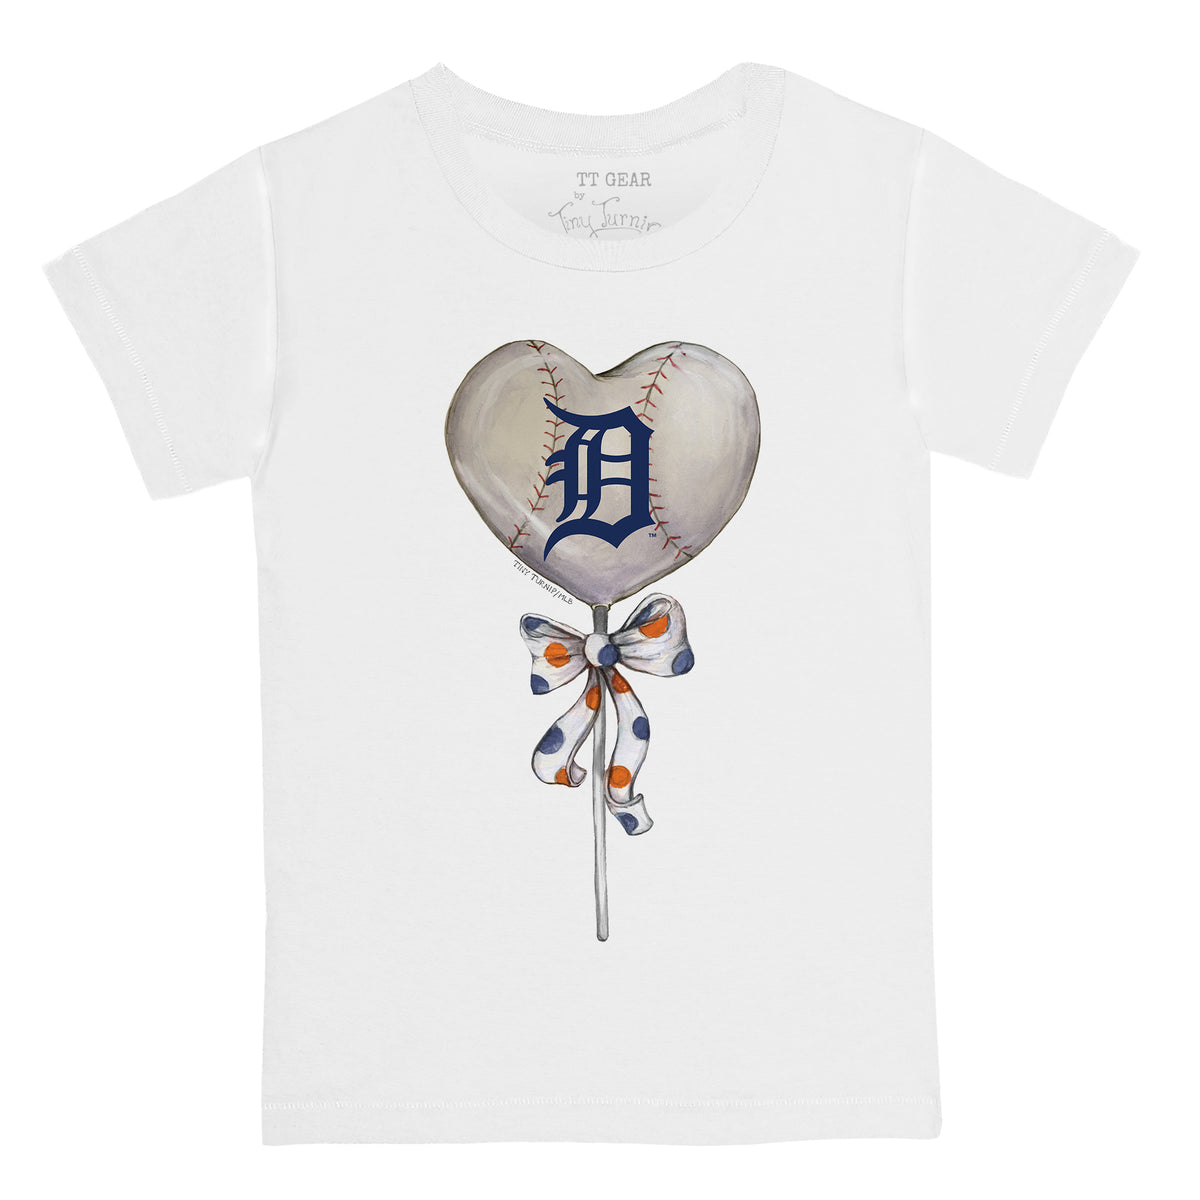 Lids Detroit Tigers Tiny Turnip Women's Baseball Bow T-Shirt - Navy